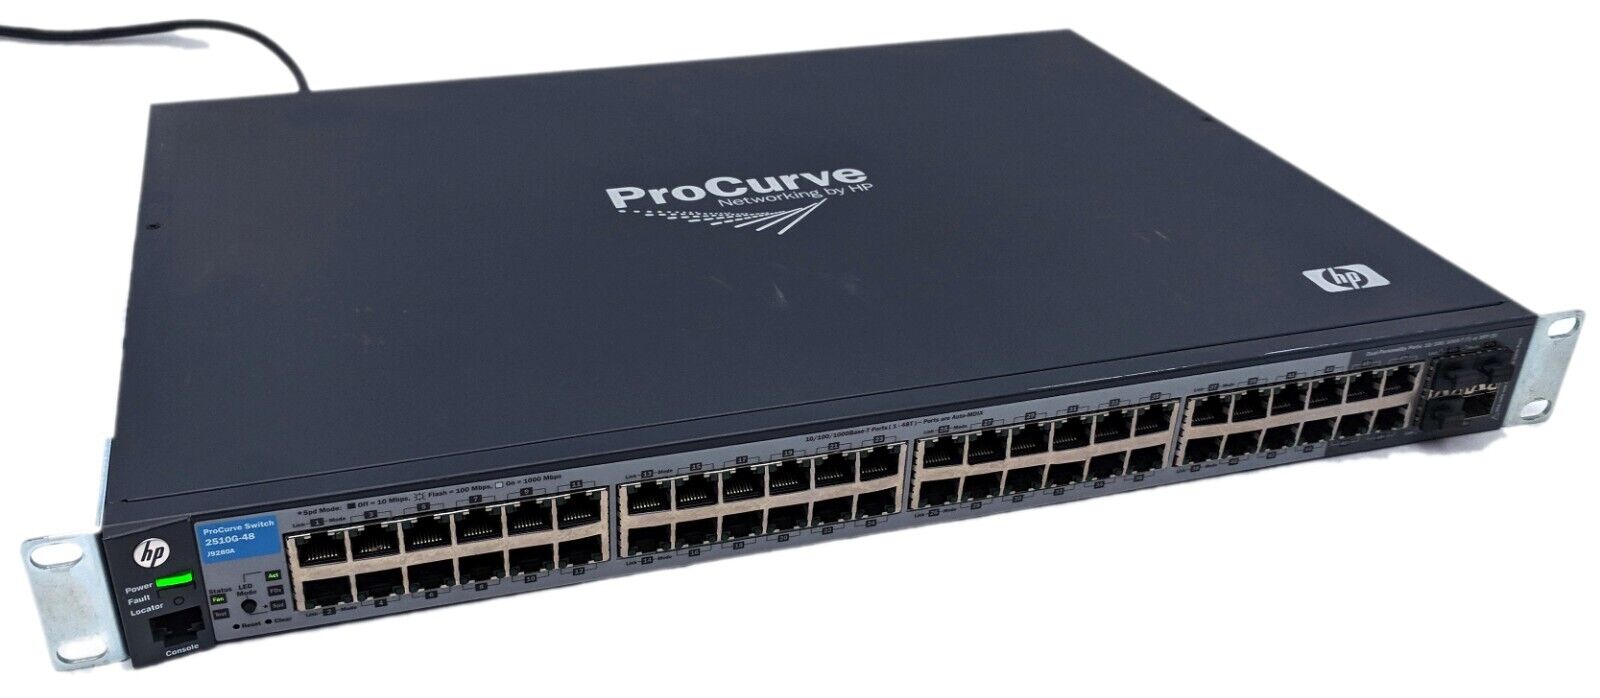 HP ProCurve 2510G-48 J9280A 48-Port Gigabit Managed Network Switch - Tested